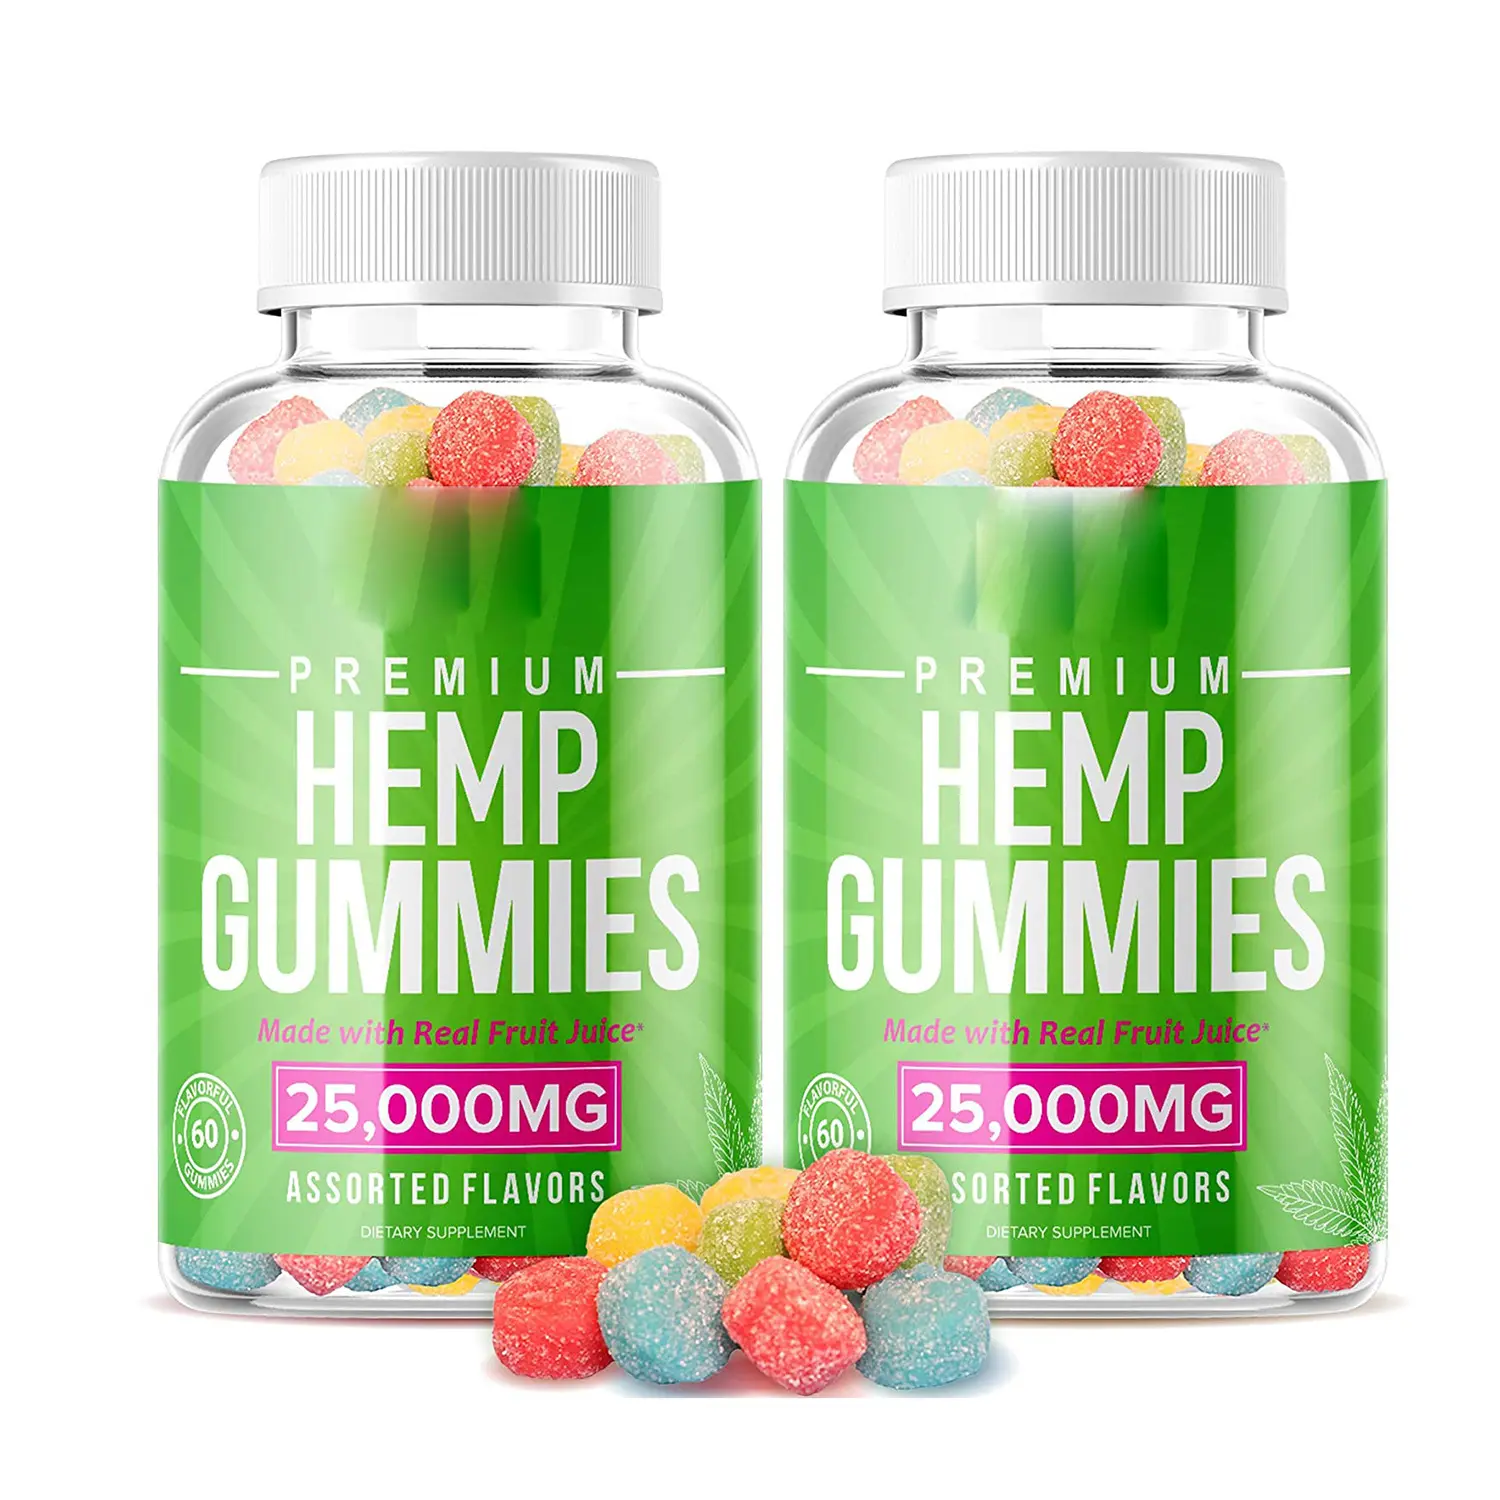 Tasty & relaxing hemp gummies promotes relaxation & healthy sleep herbal dietary supplement